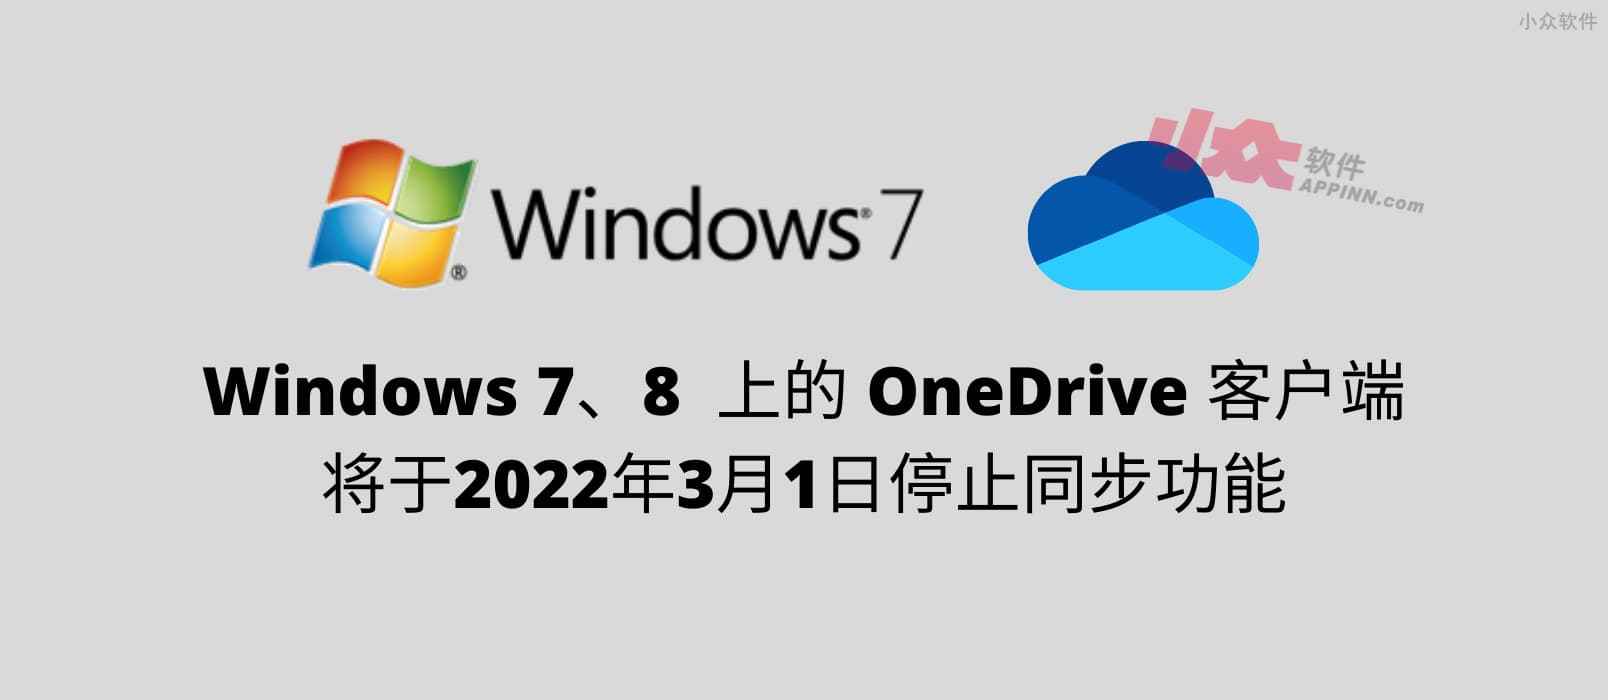 Windows 7、8 上的个人 OneDrive 客户端将于2022年3月1日停止同步